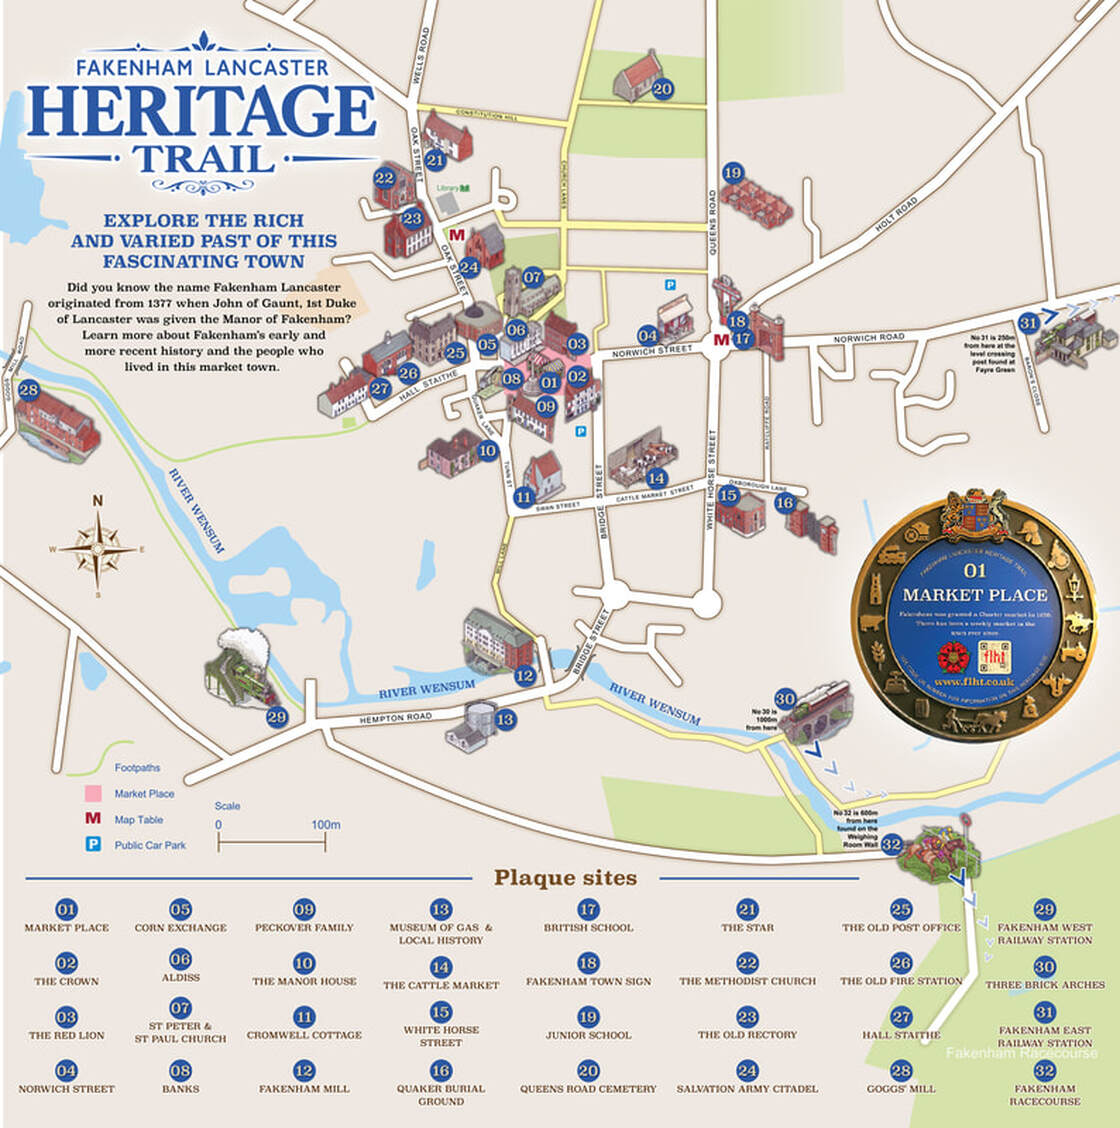 Fakenham Heritage Trail Map